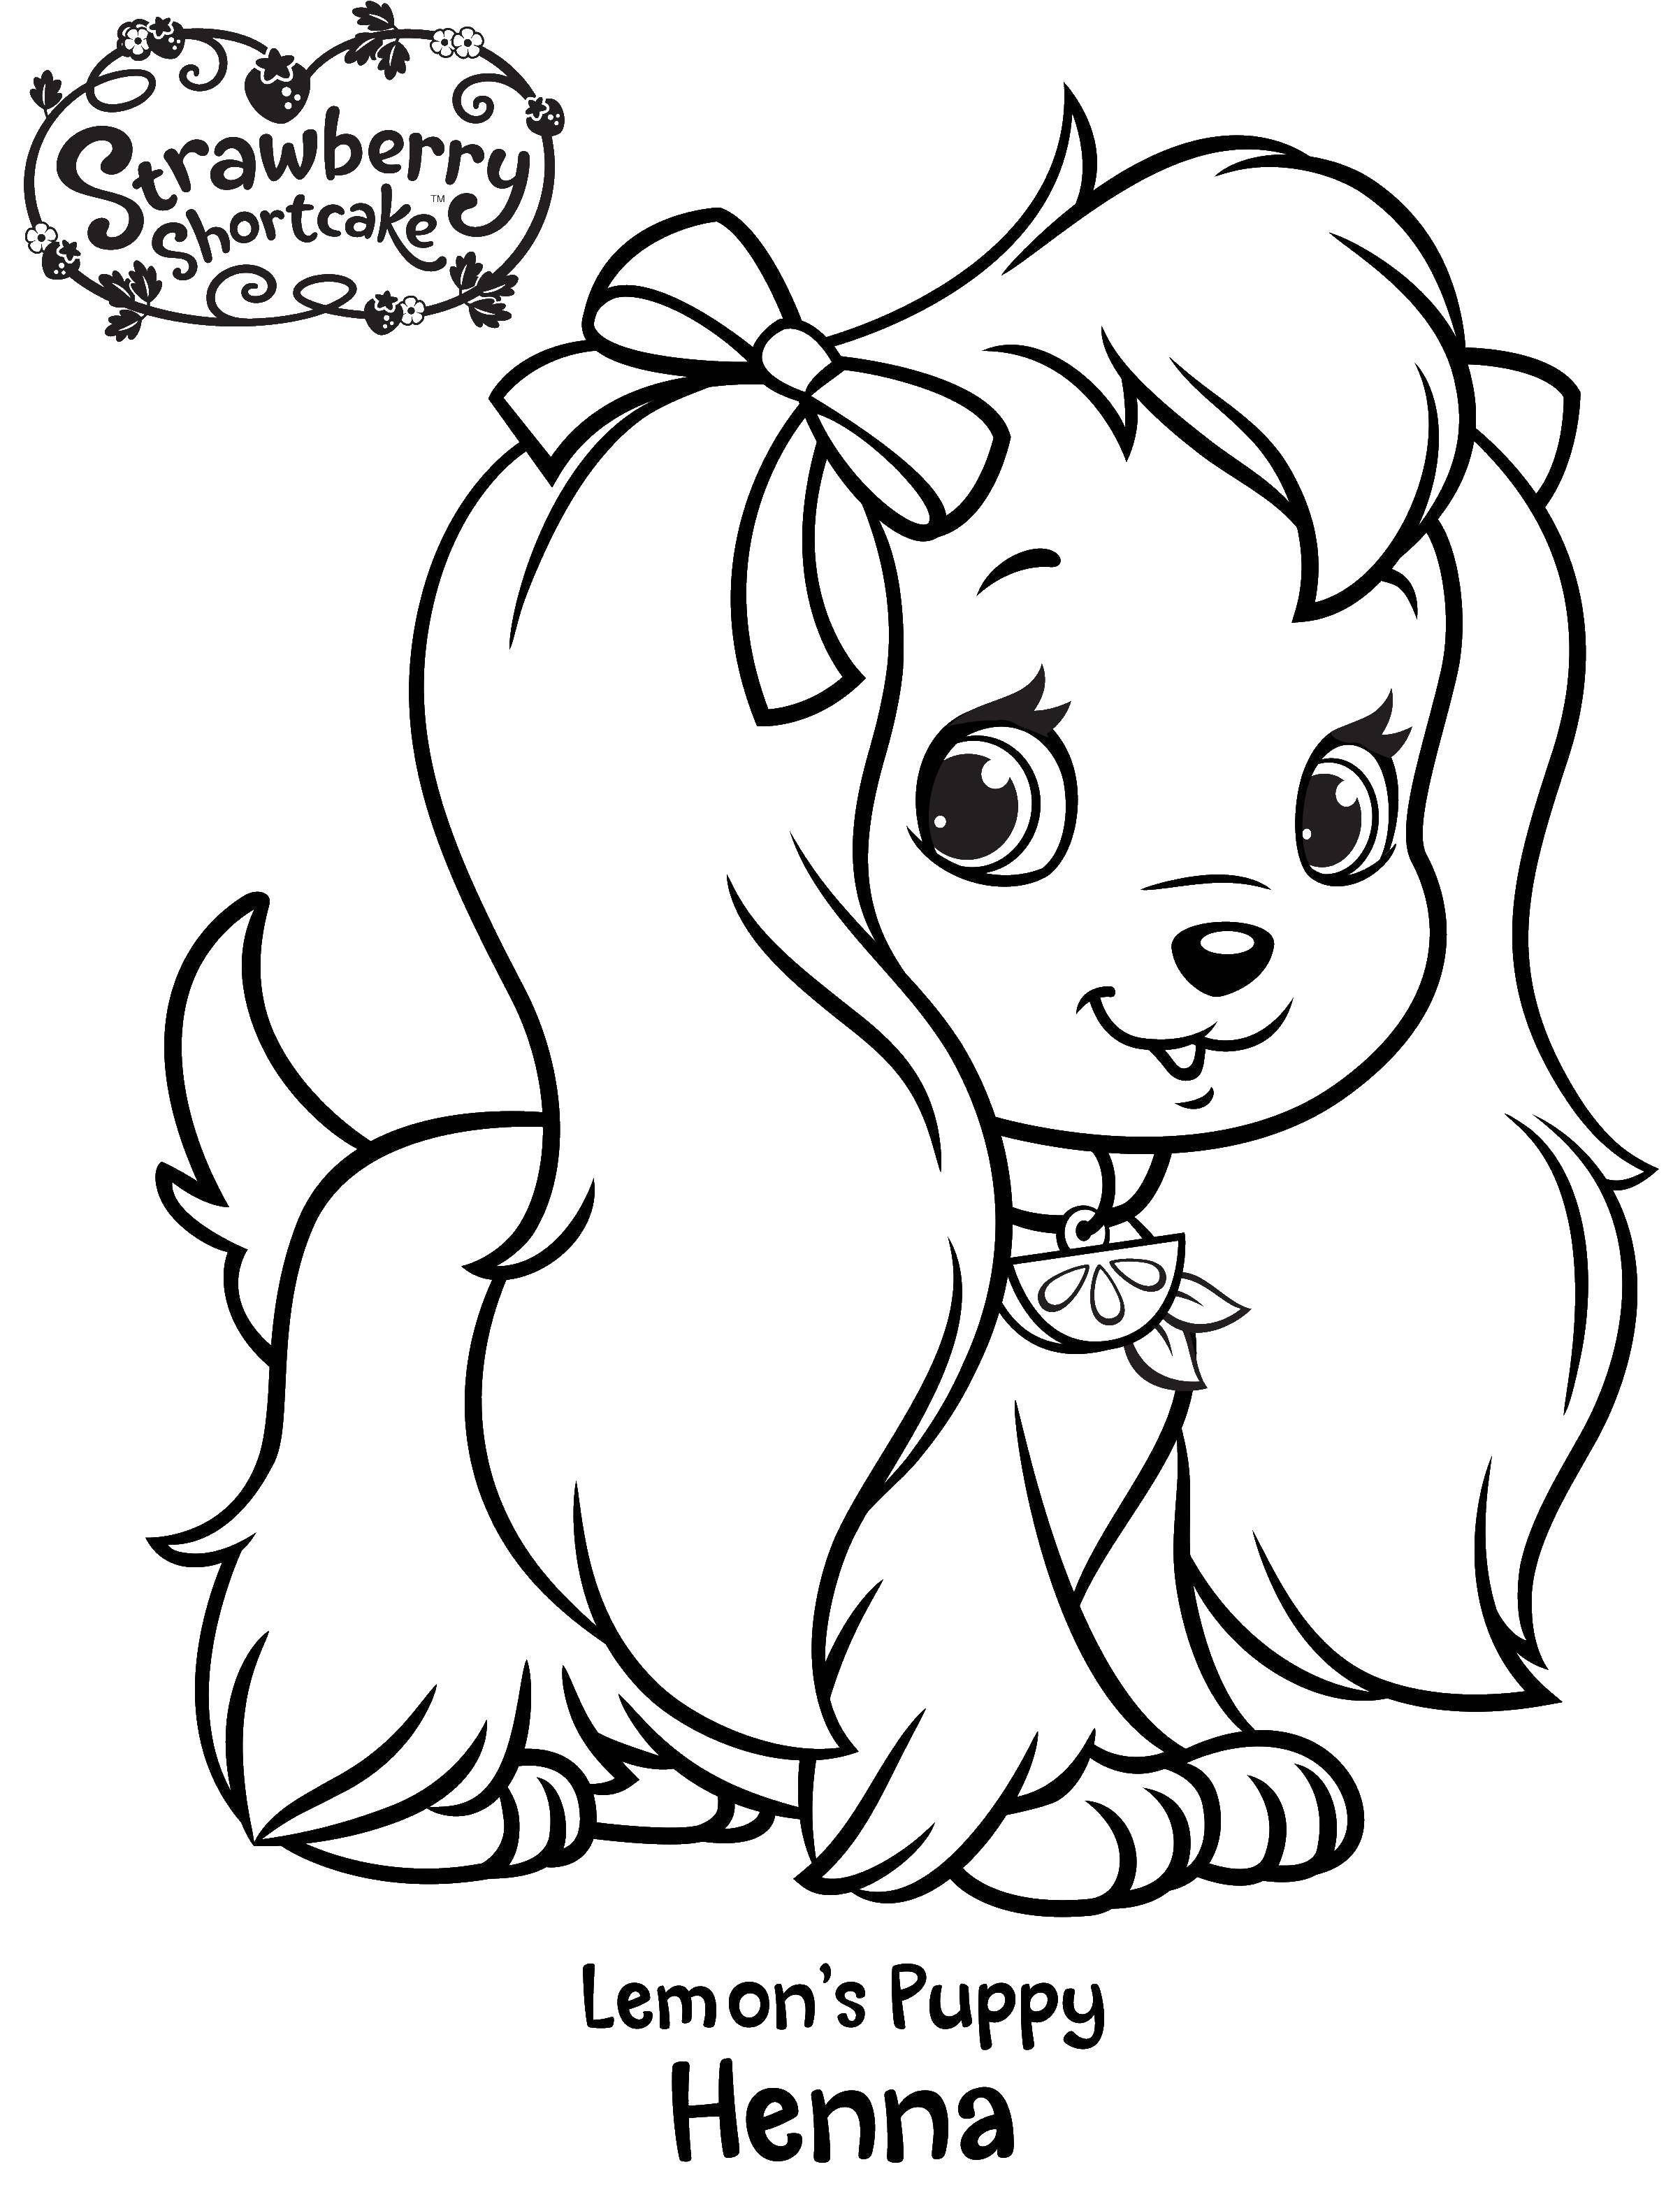 Coloring Puppy lemon Haina. Category Charlotte zemlyanichka cartoons. Tags:  Charlotte, a strawberry, cartoons, dog.